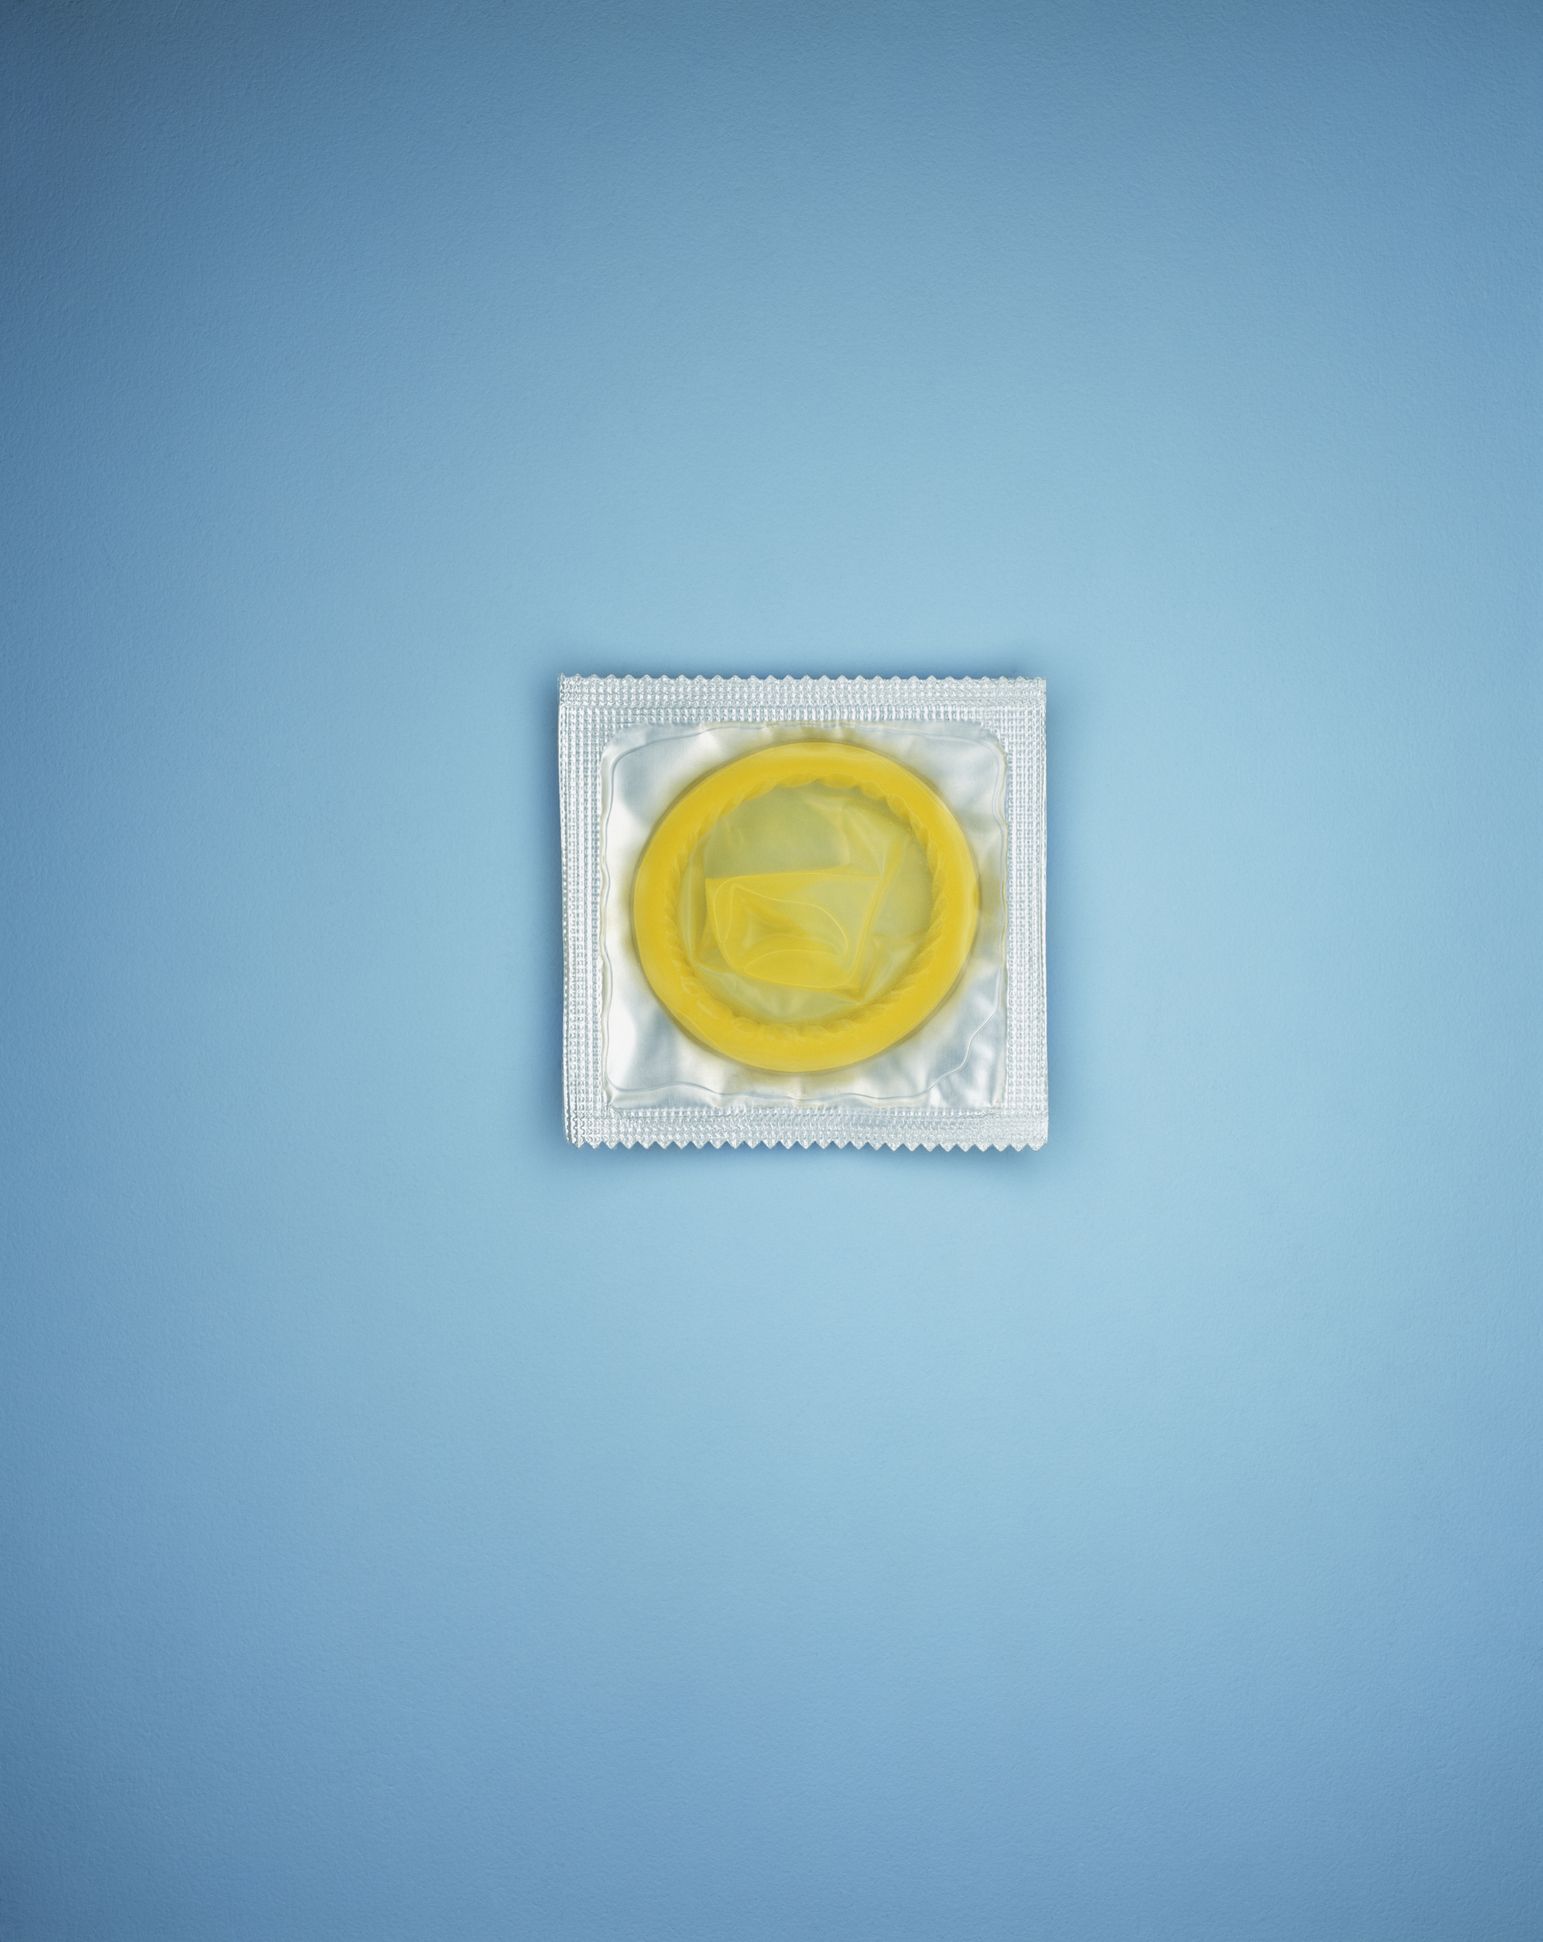 Best Place To Buy Condoms Online